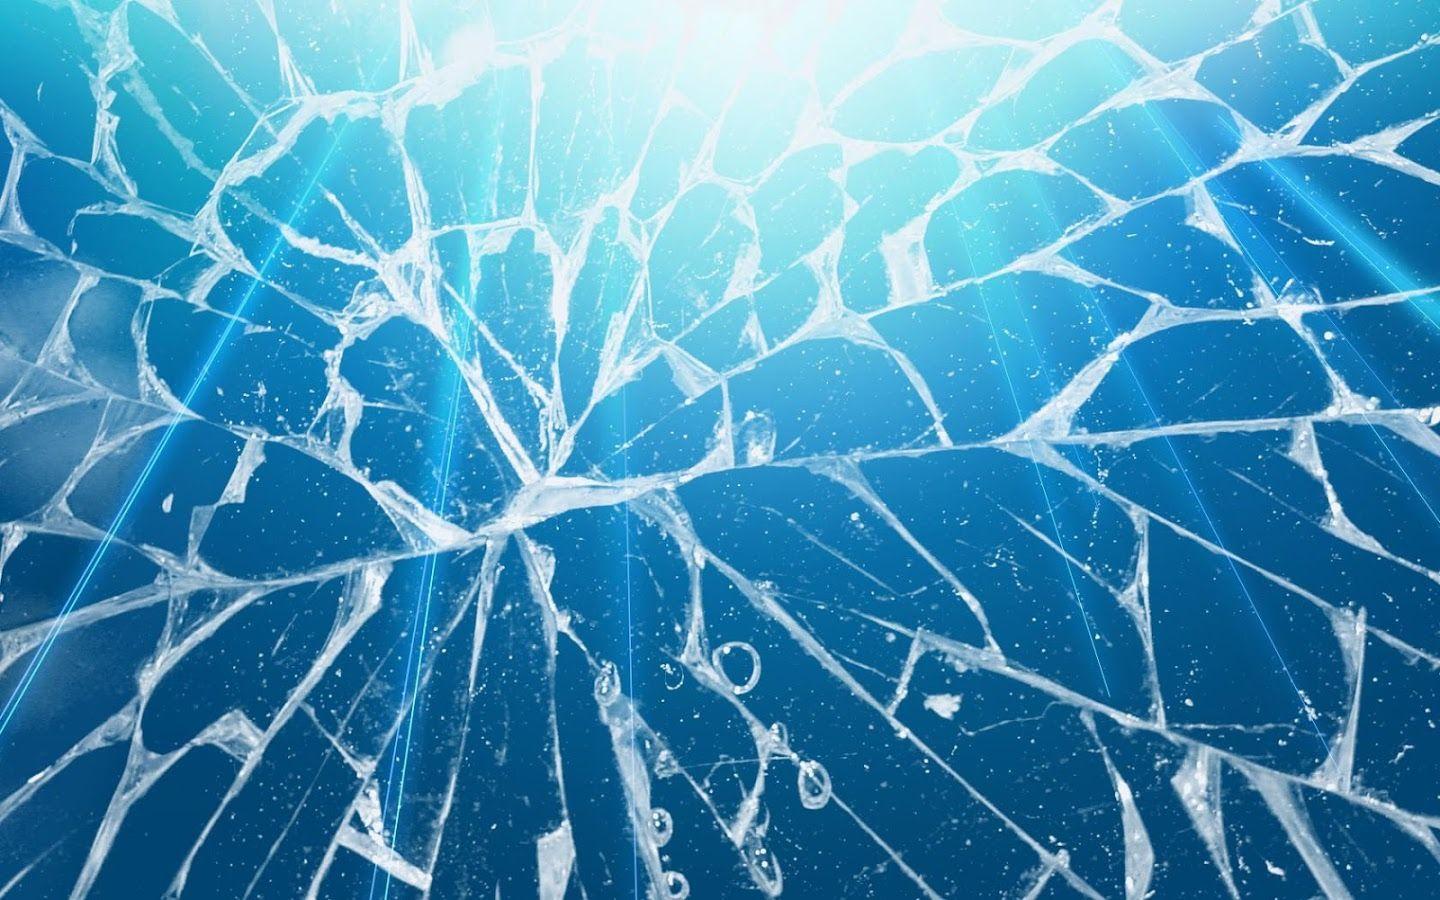 Broken glass Wallpaper Apps on Google Play